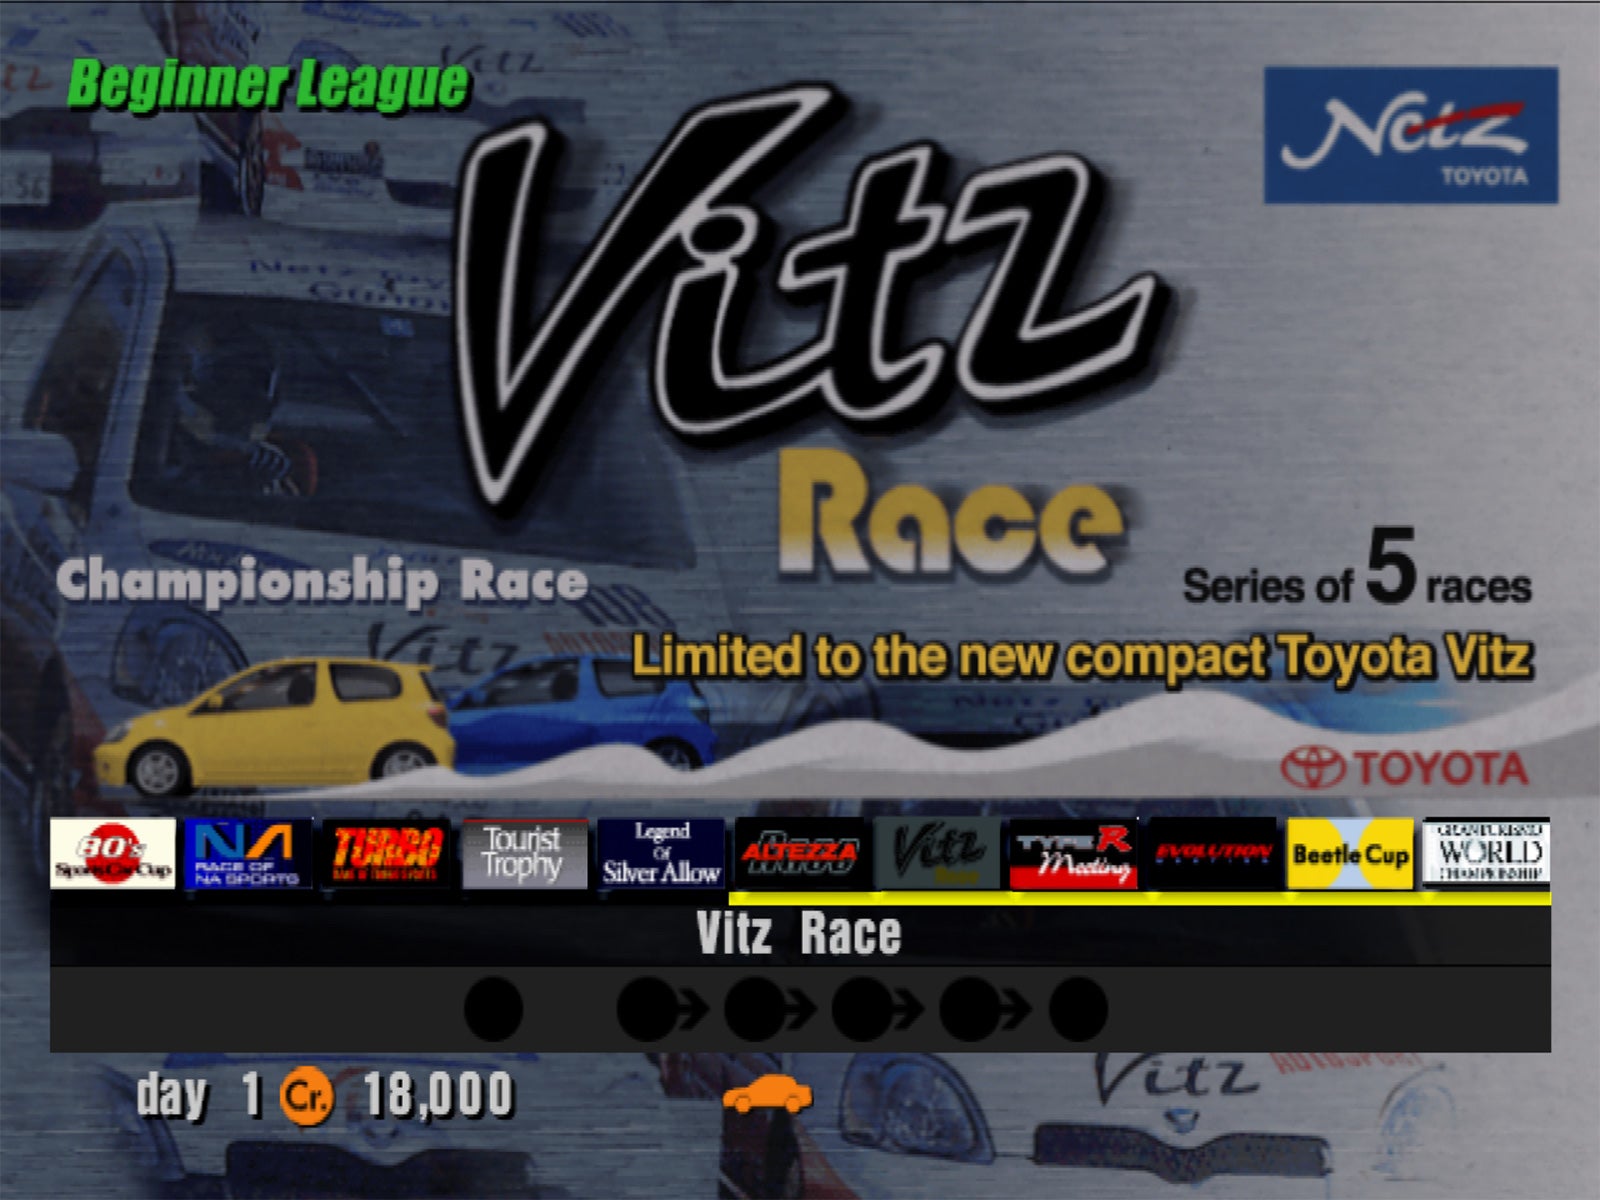 Gran Turismo 3’s Event Posters Were the Peak of Y2K Graphic Design